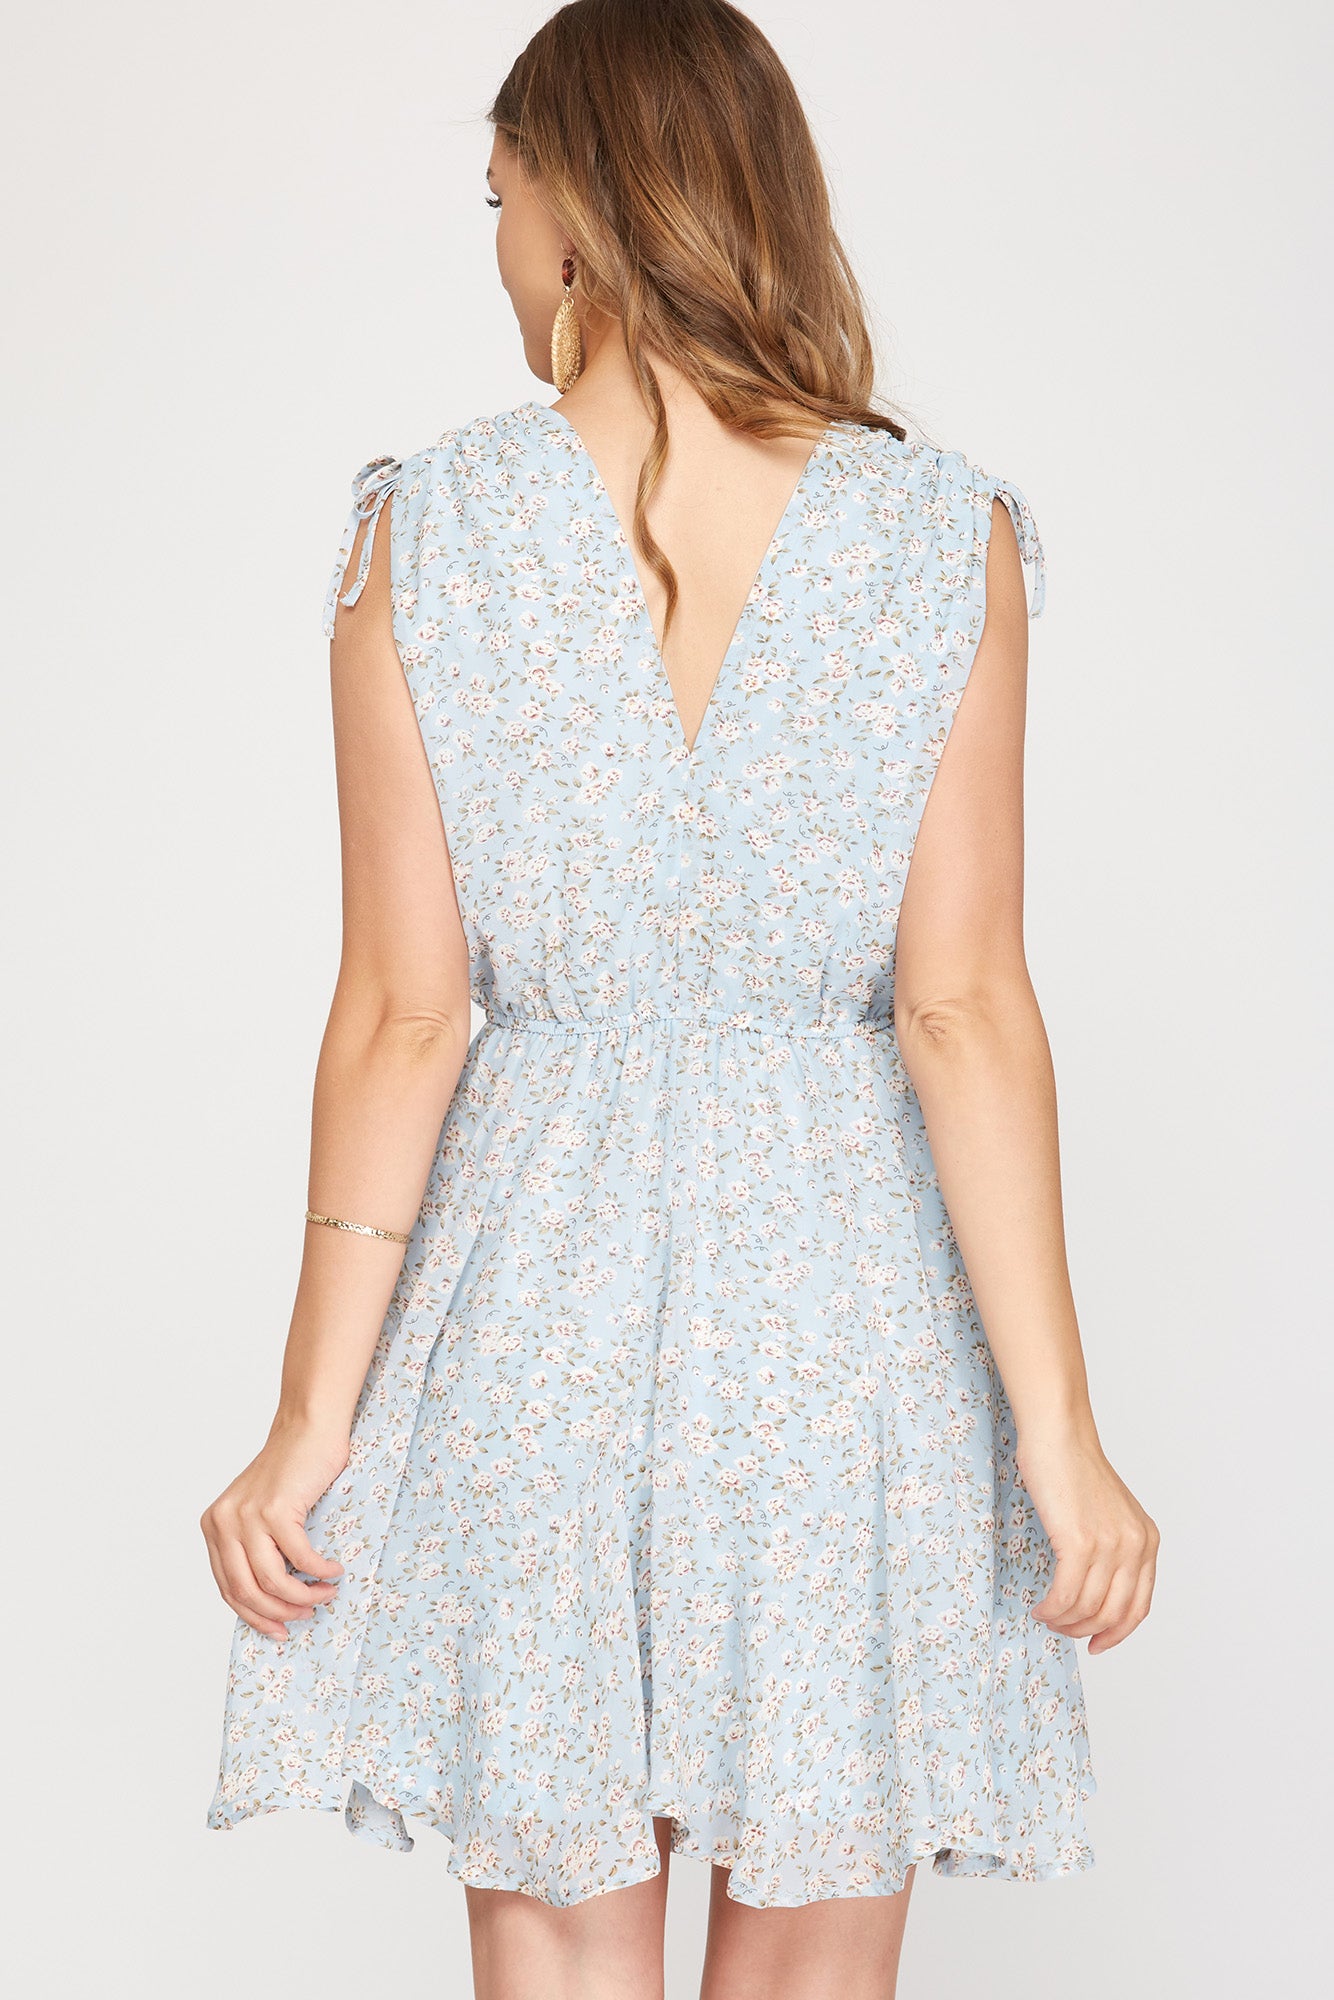 Sleeveless Drawstring Shoulder Floral Light Blue Dress